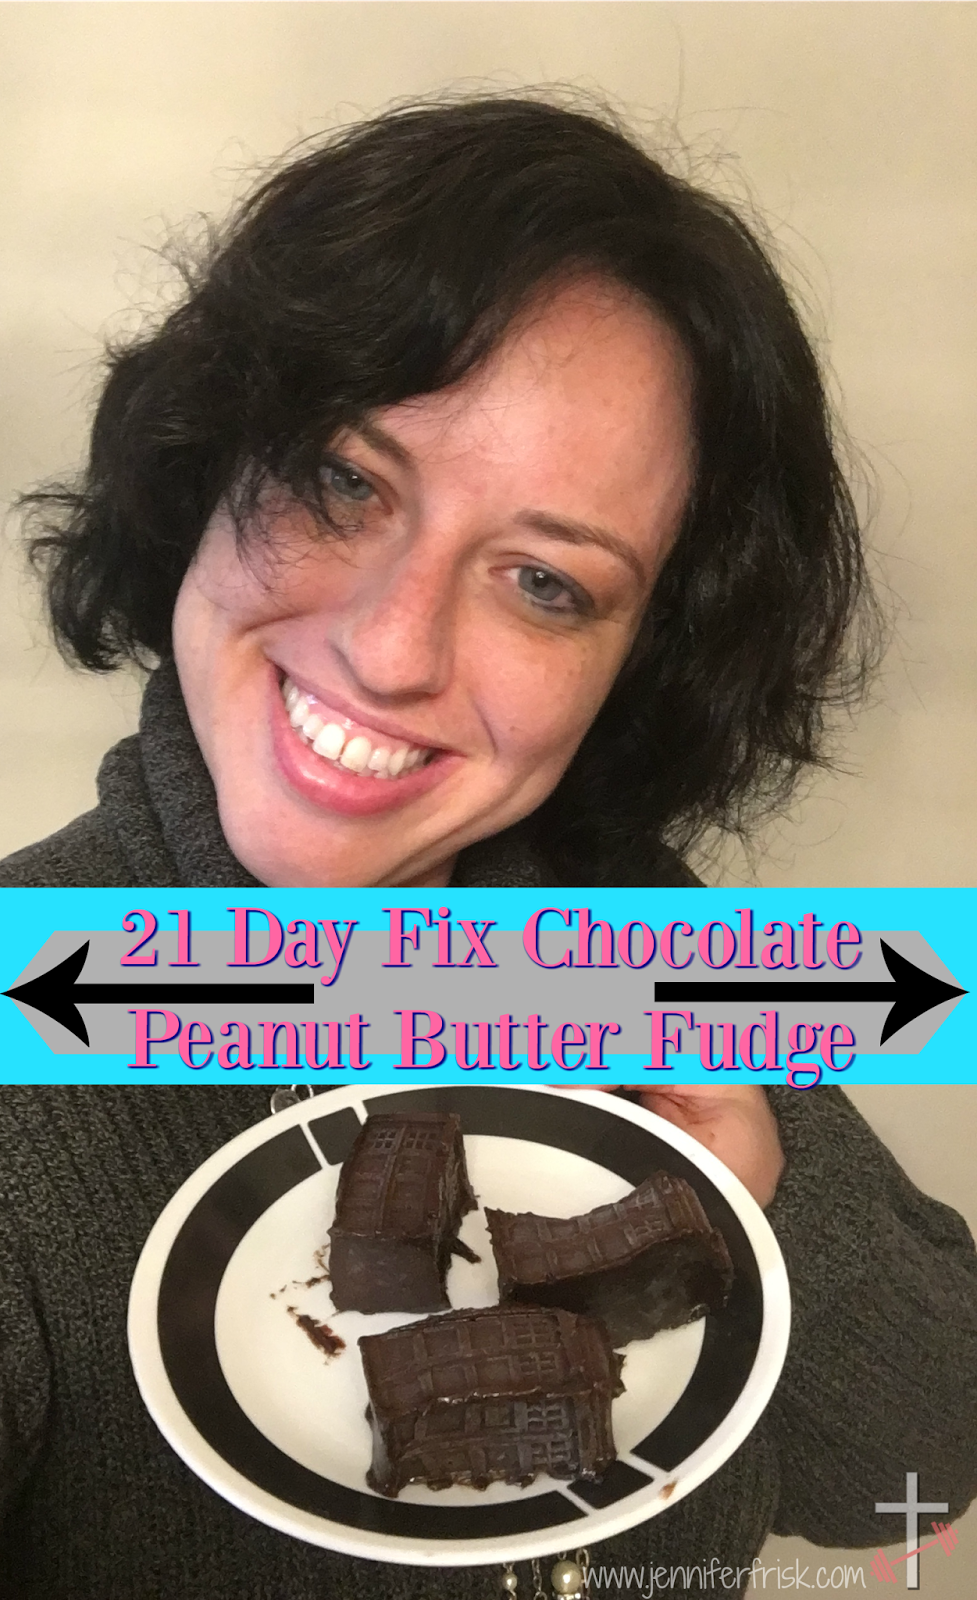 Joy in the Journey: Midweek Mealtime - Peanut Butter Chocolate Fudge ...